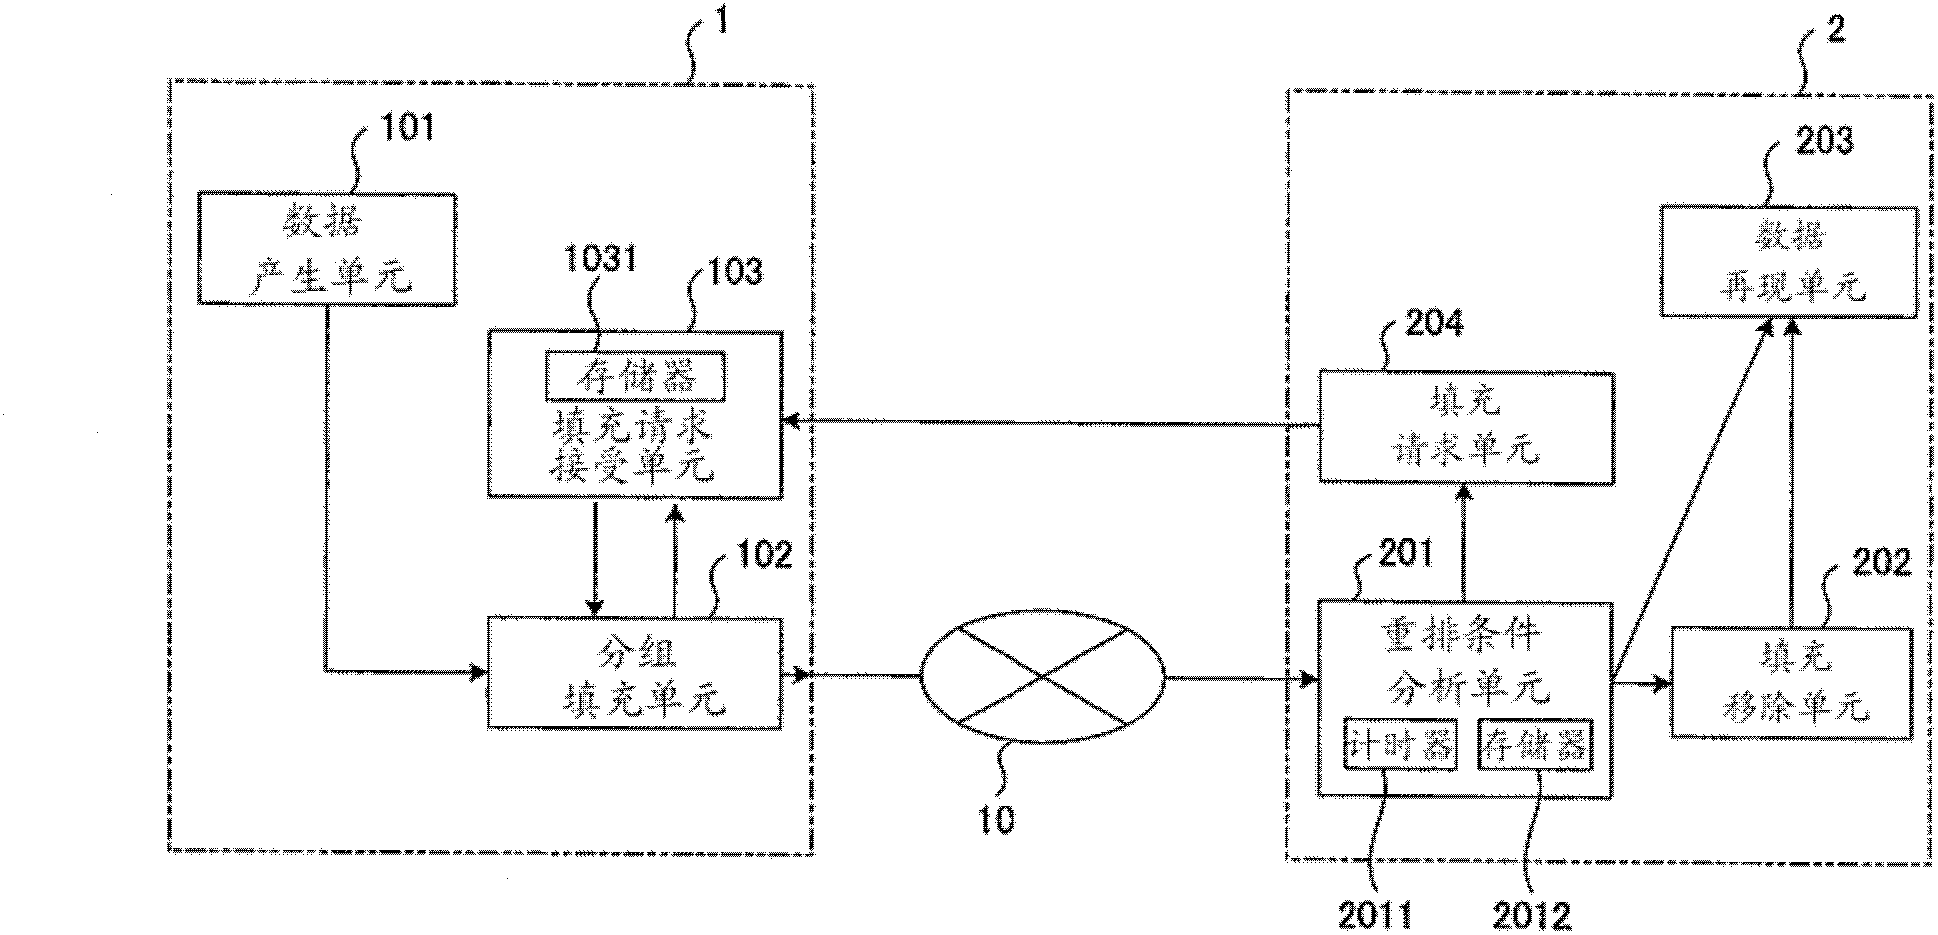 Transmitter terminal and receiver terminal